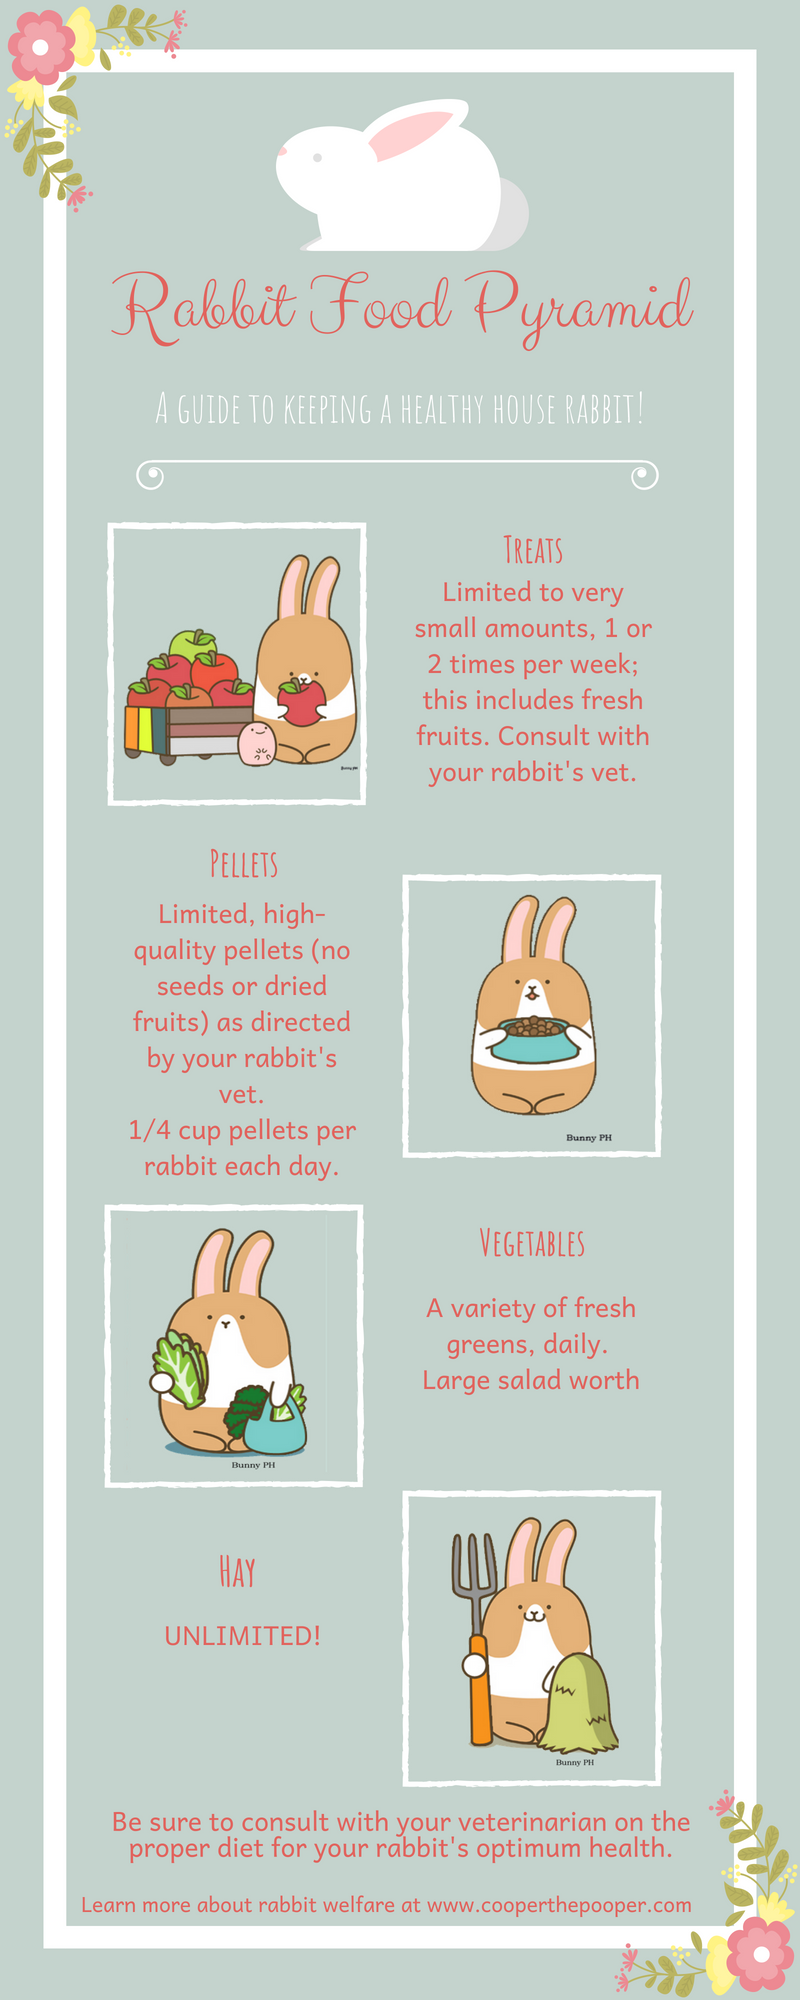 Cooper the Pooper - Grey Netherland Dwarf Rabbit - Inforgraphic of Rabbit Food Pyramid